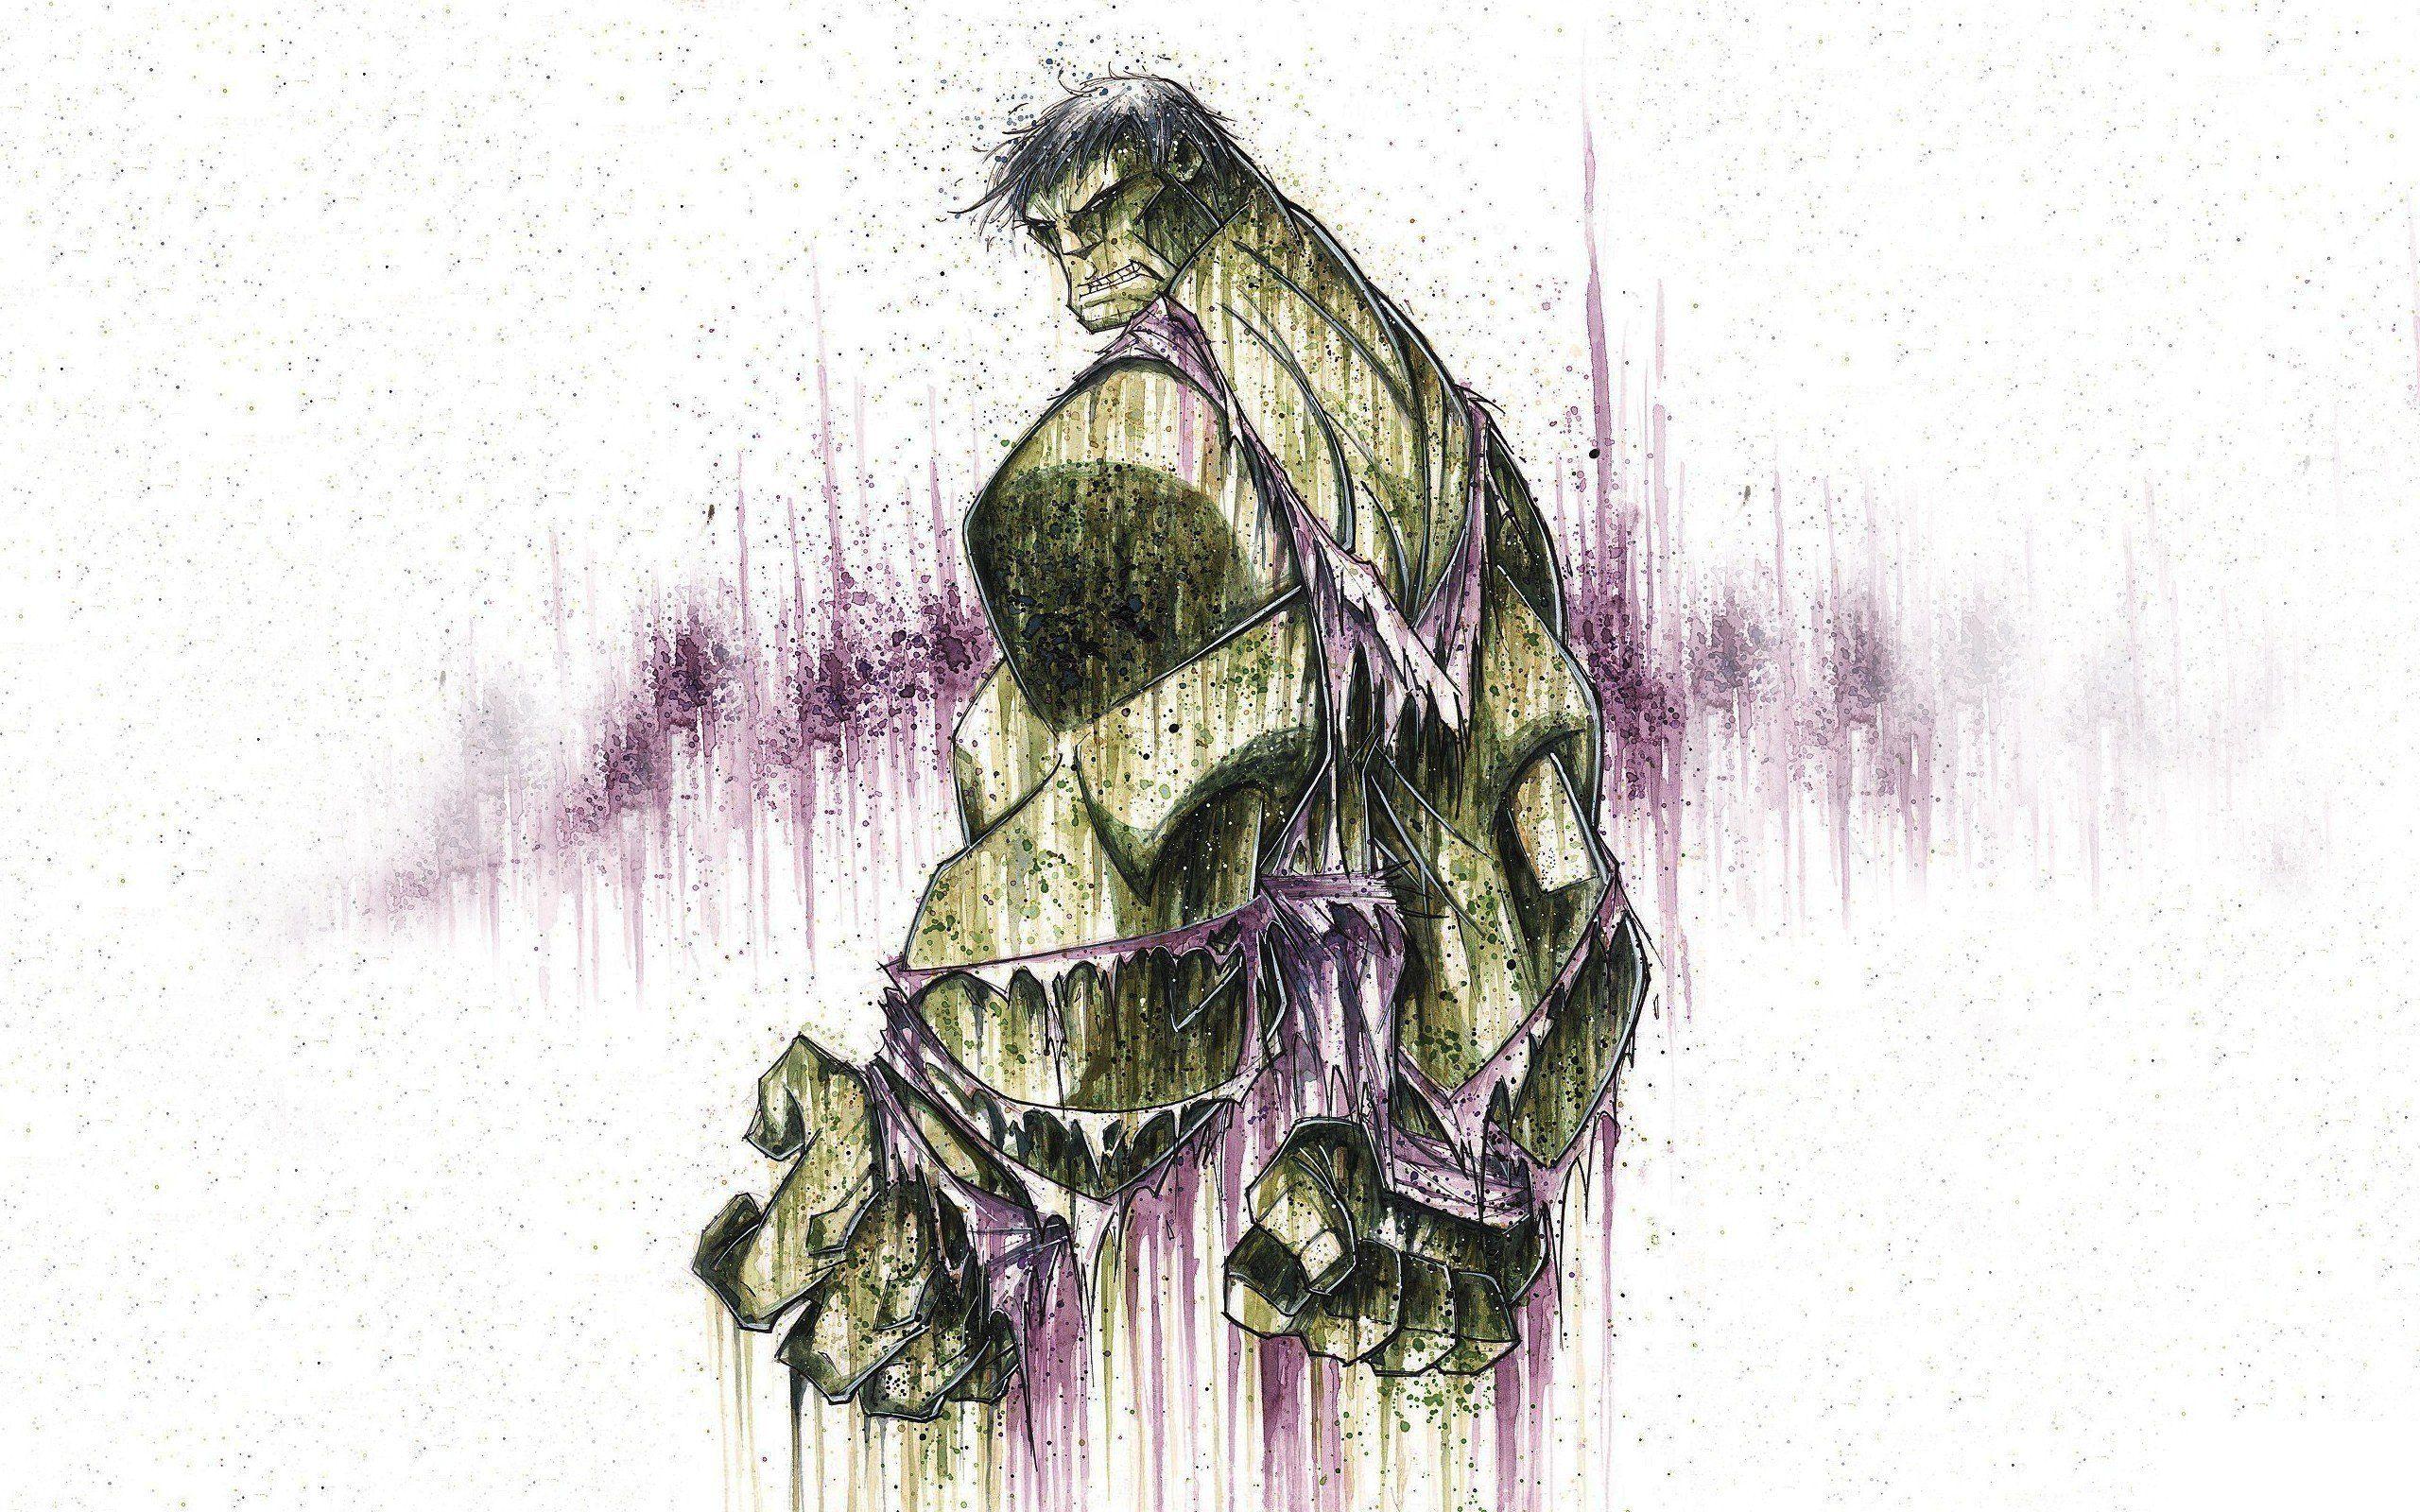 Hulk Background free download. Wallpaper, Background, Image